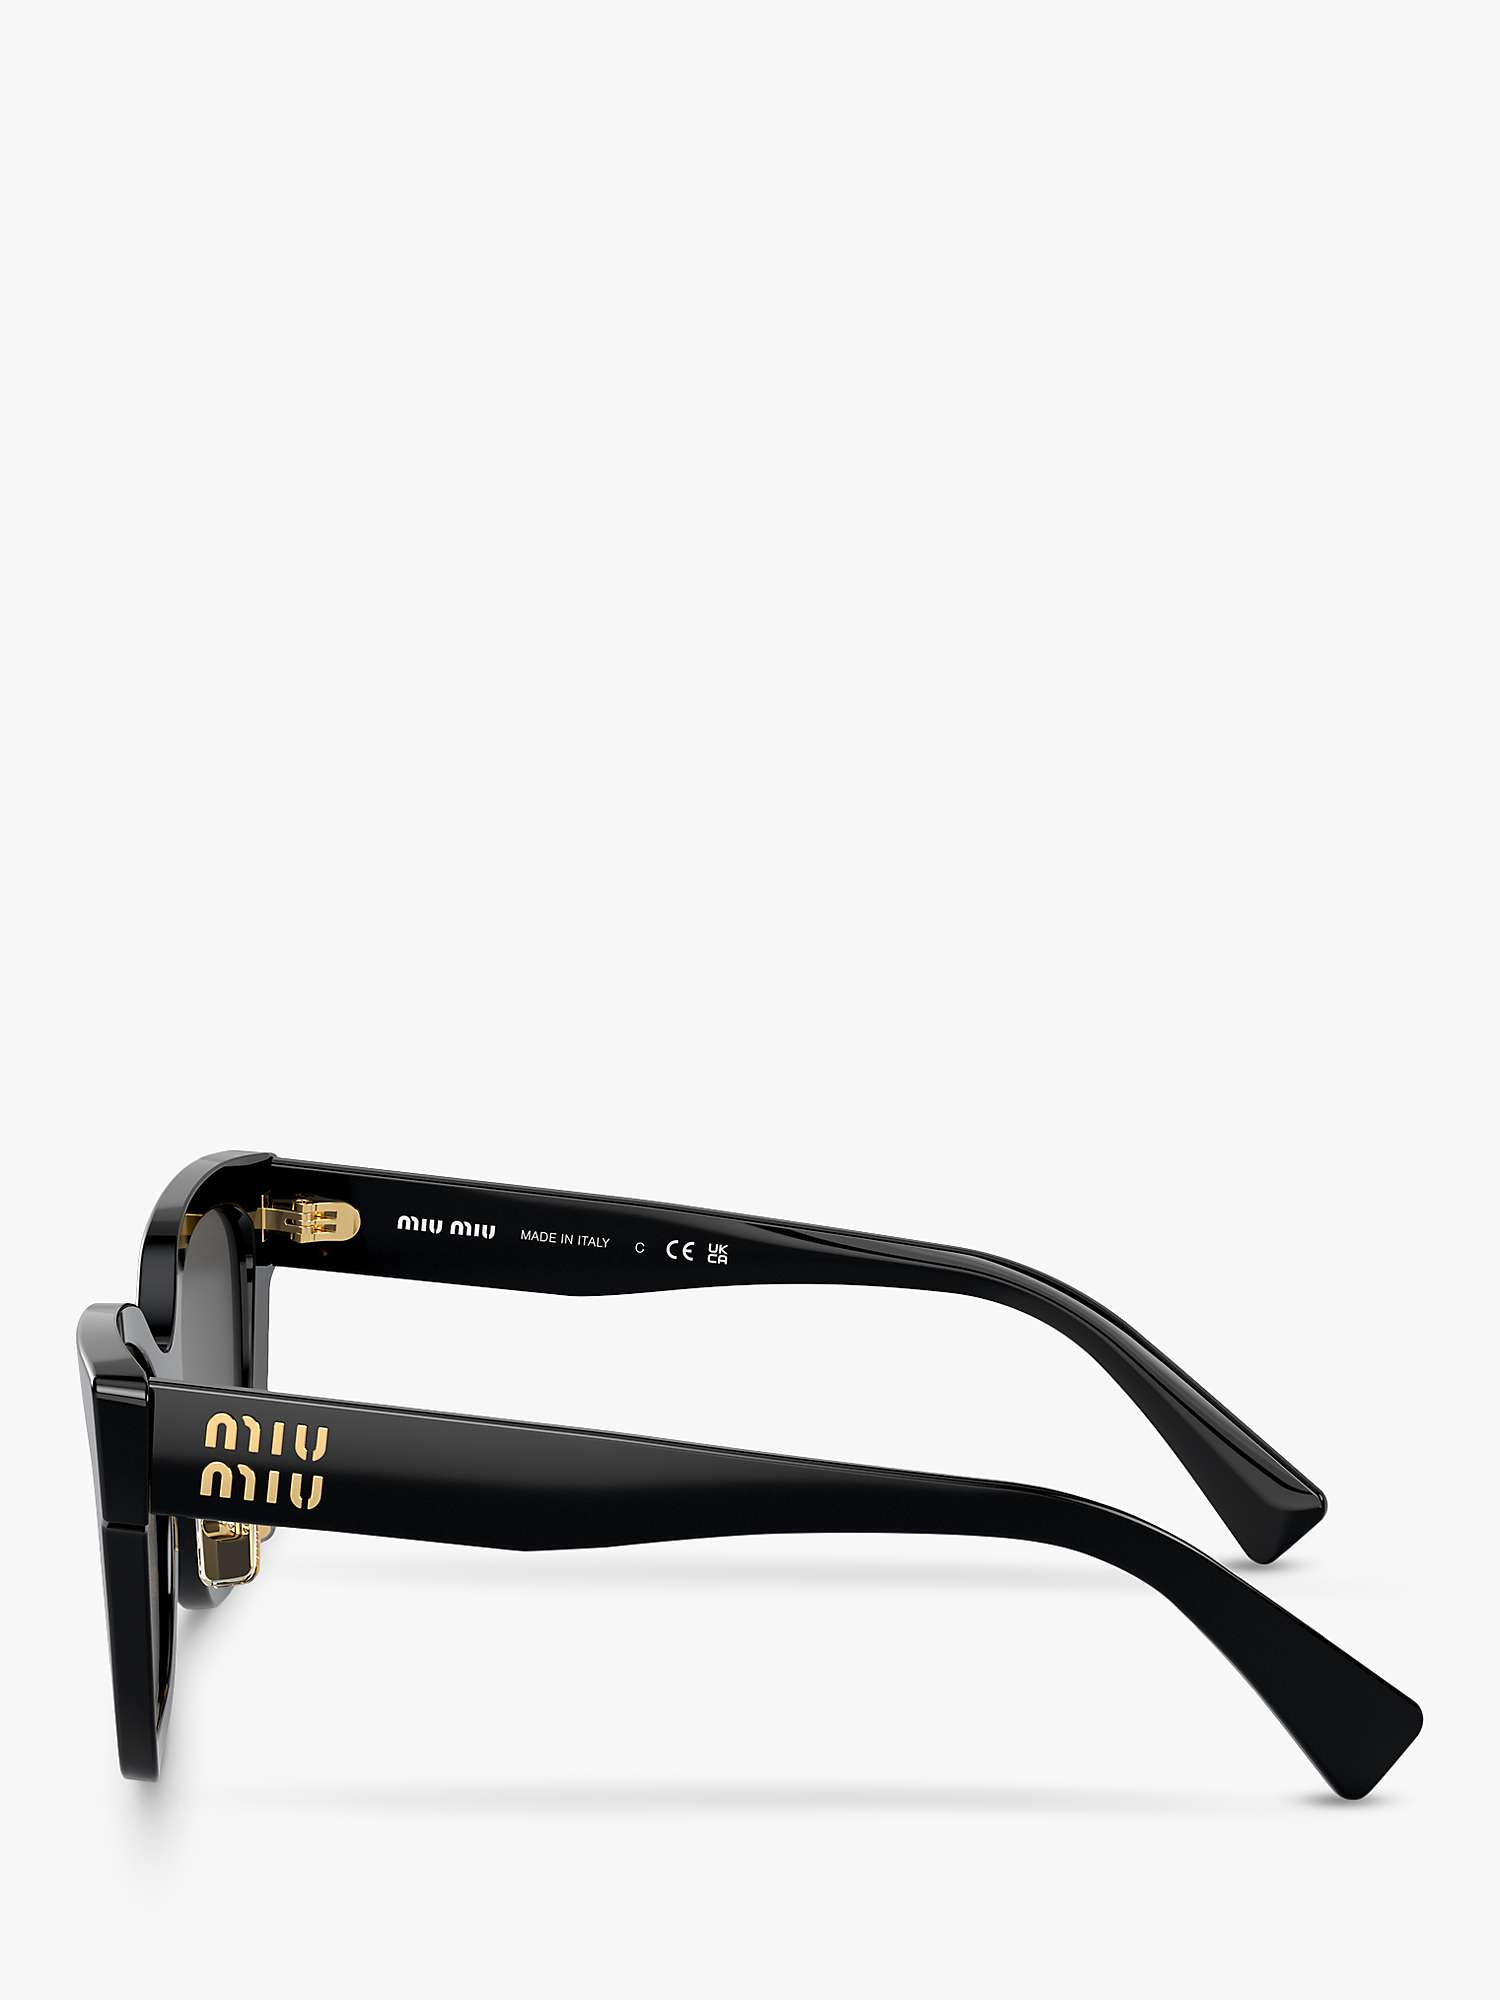 Buy Miu Miu MU 02ZS Women's Cat's Eye Sunglasses, Black Online at johnlewis.com